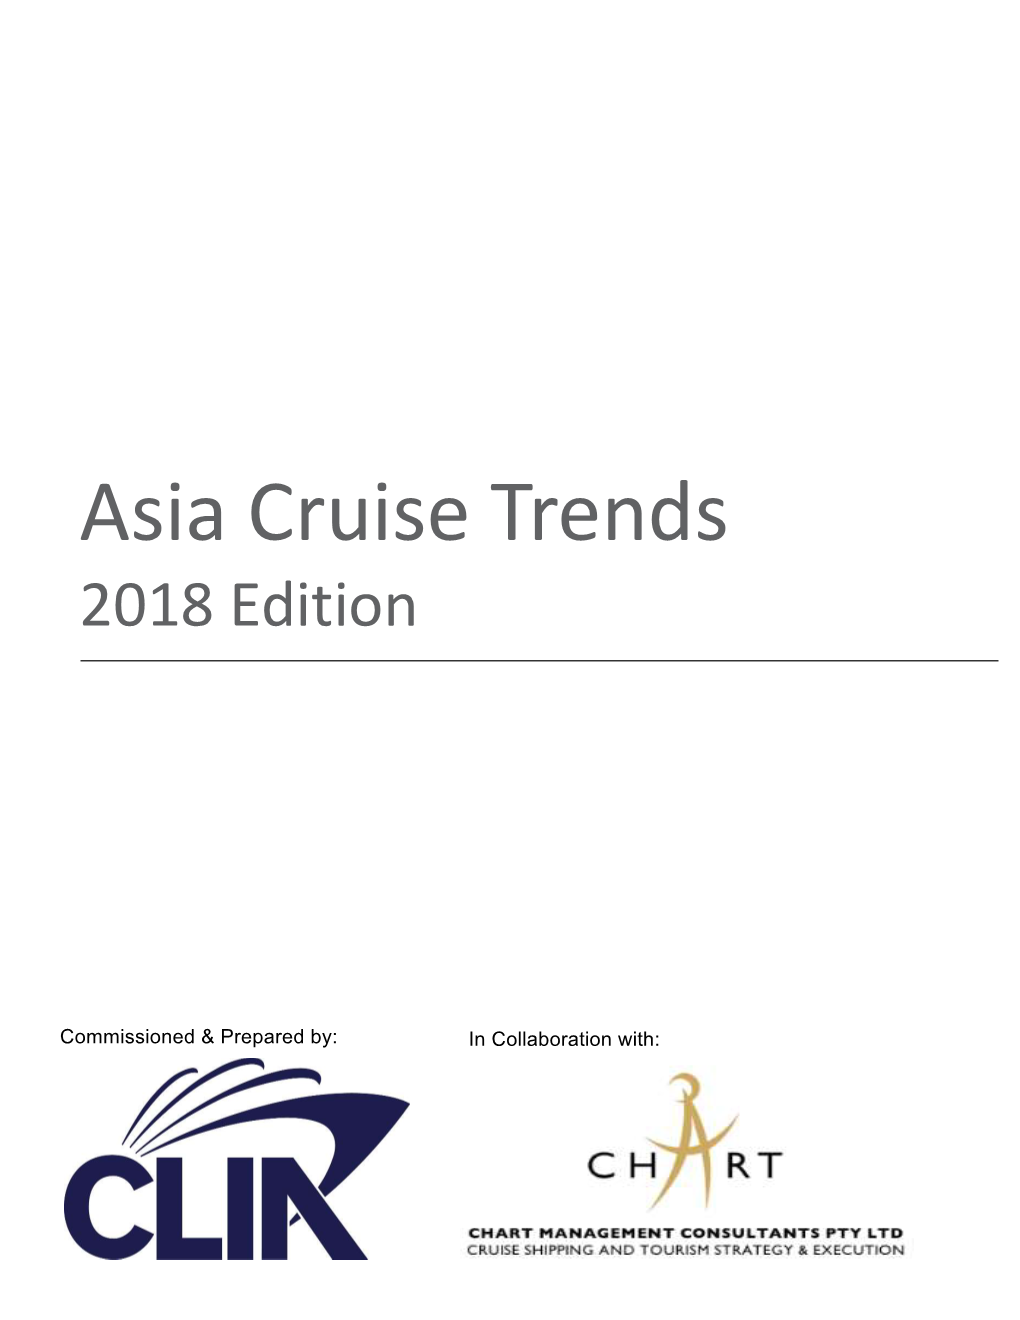 Asia Cruise Trends 2018 Report